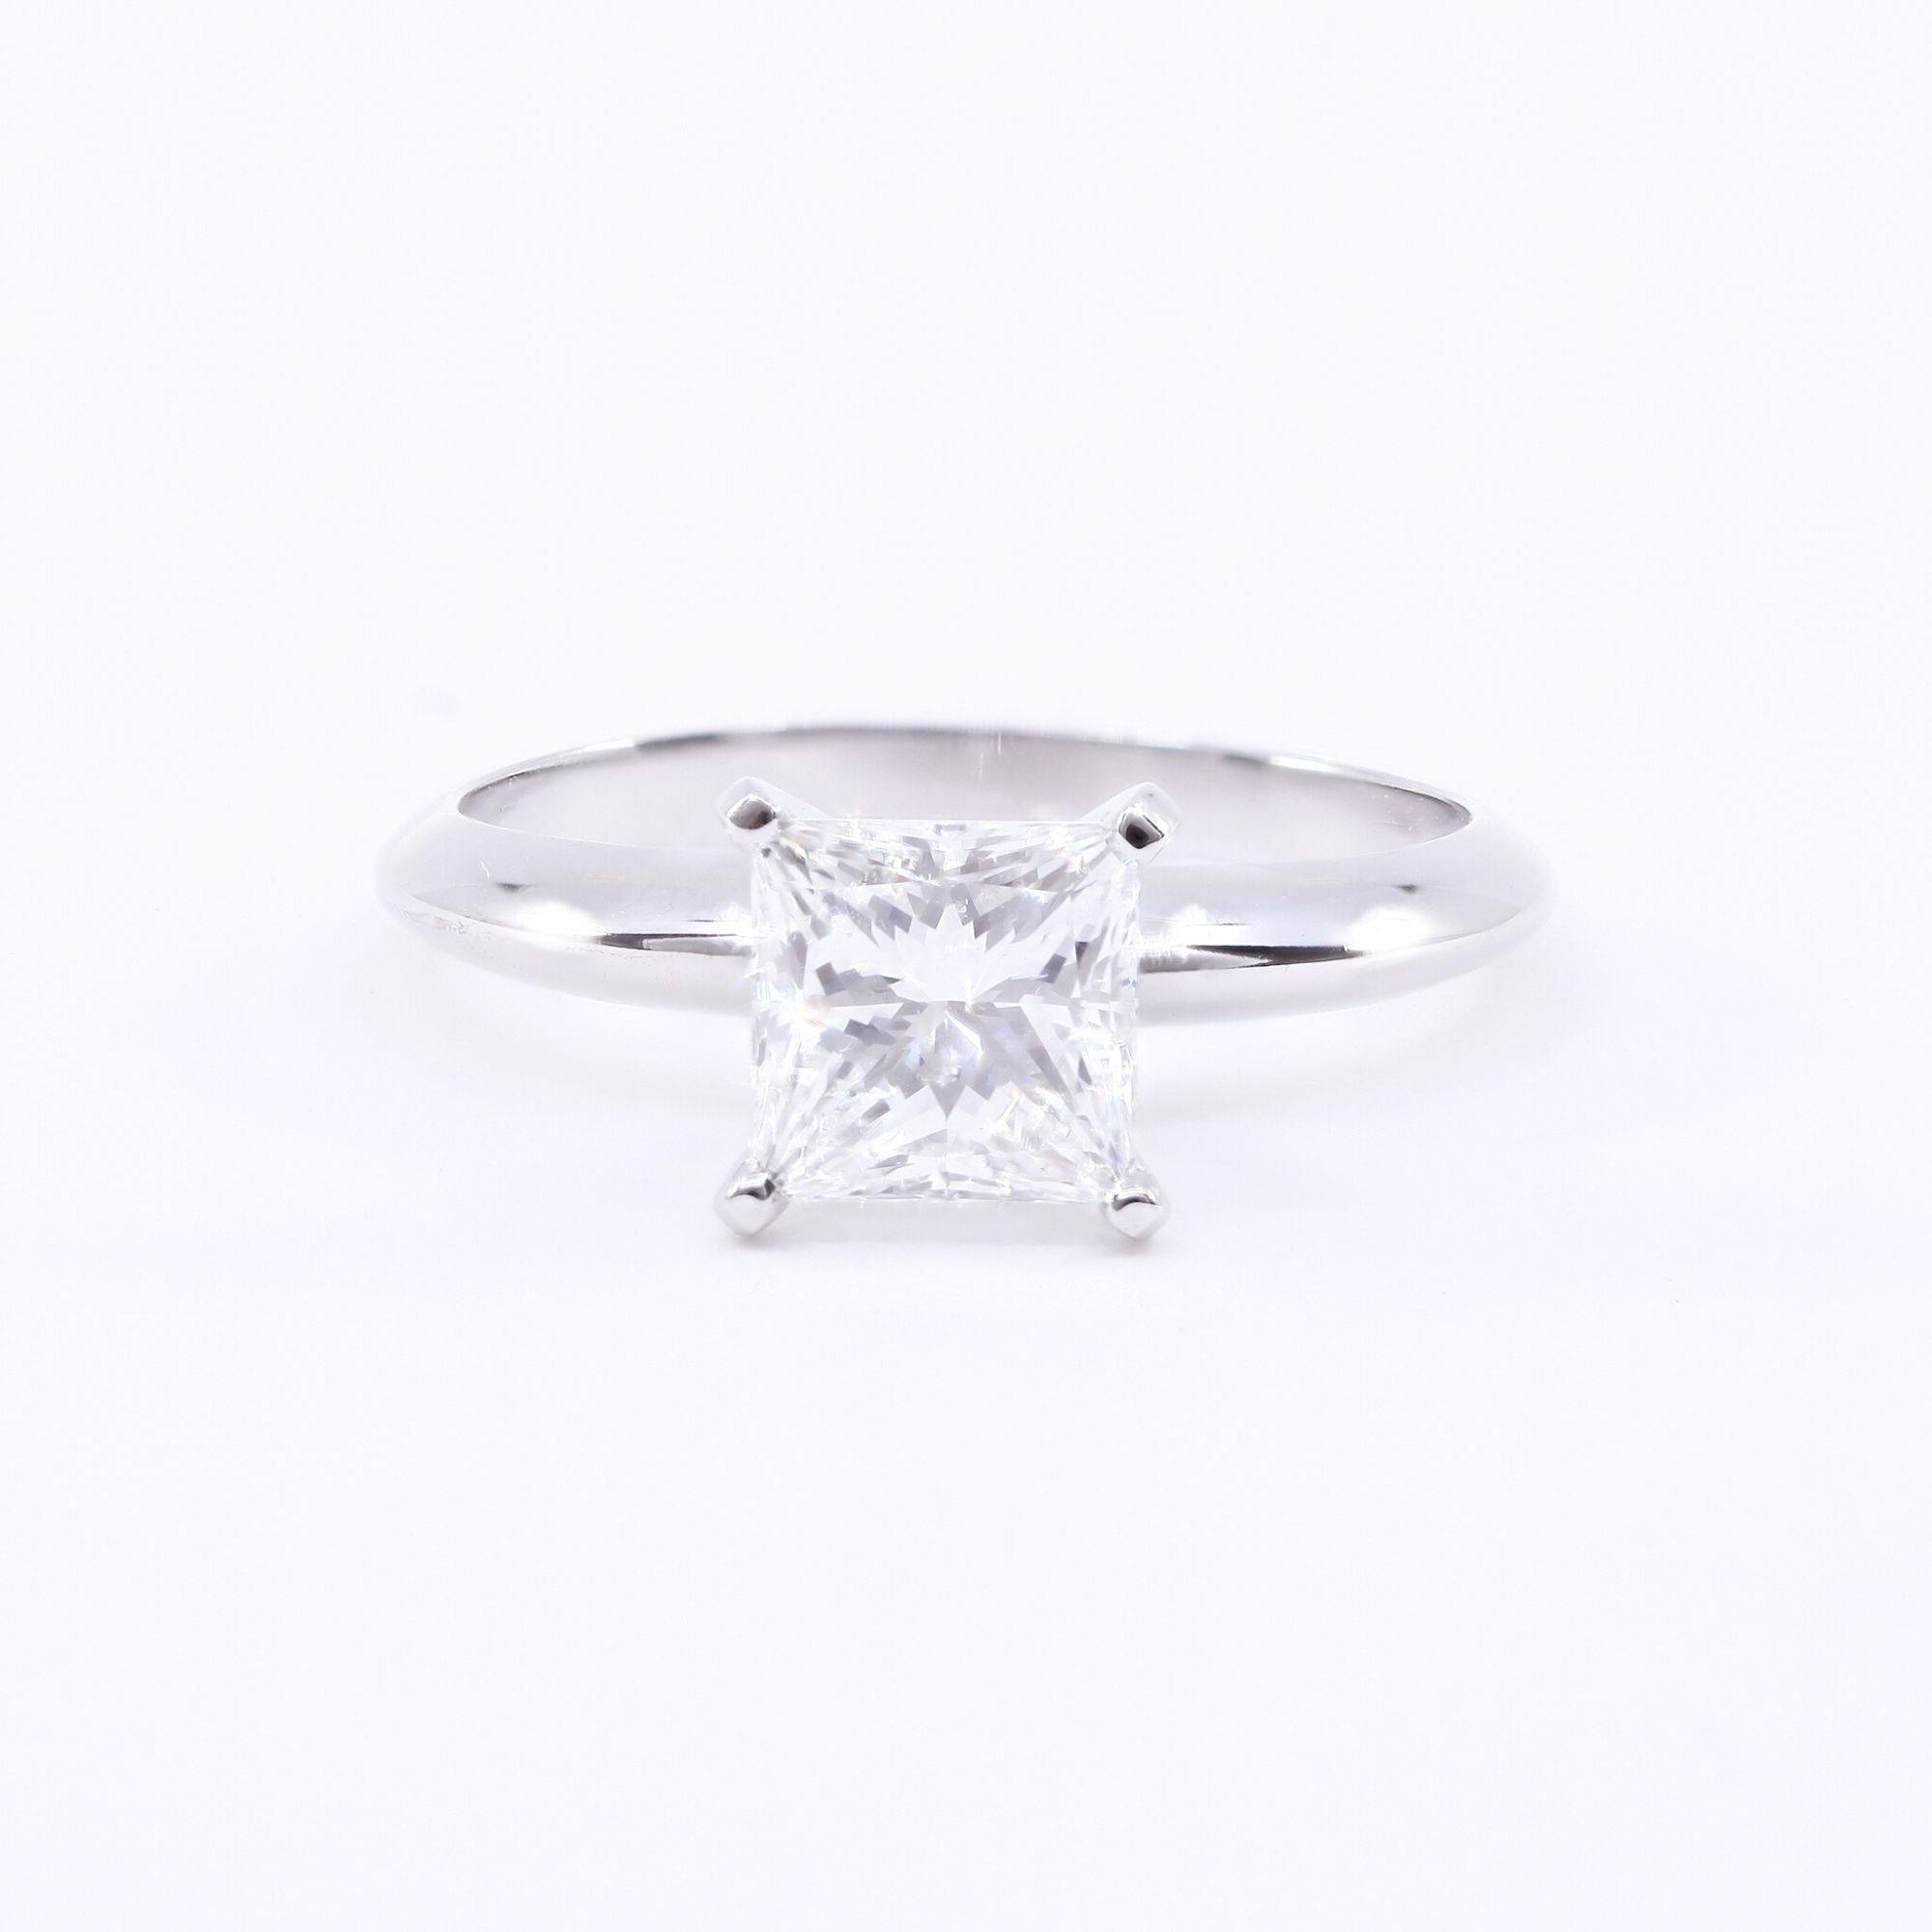 14k white gold princess-cut diamond solitaire engagement ring